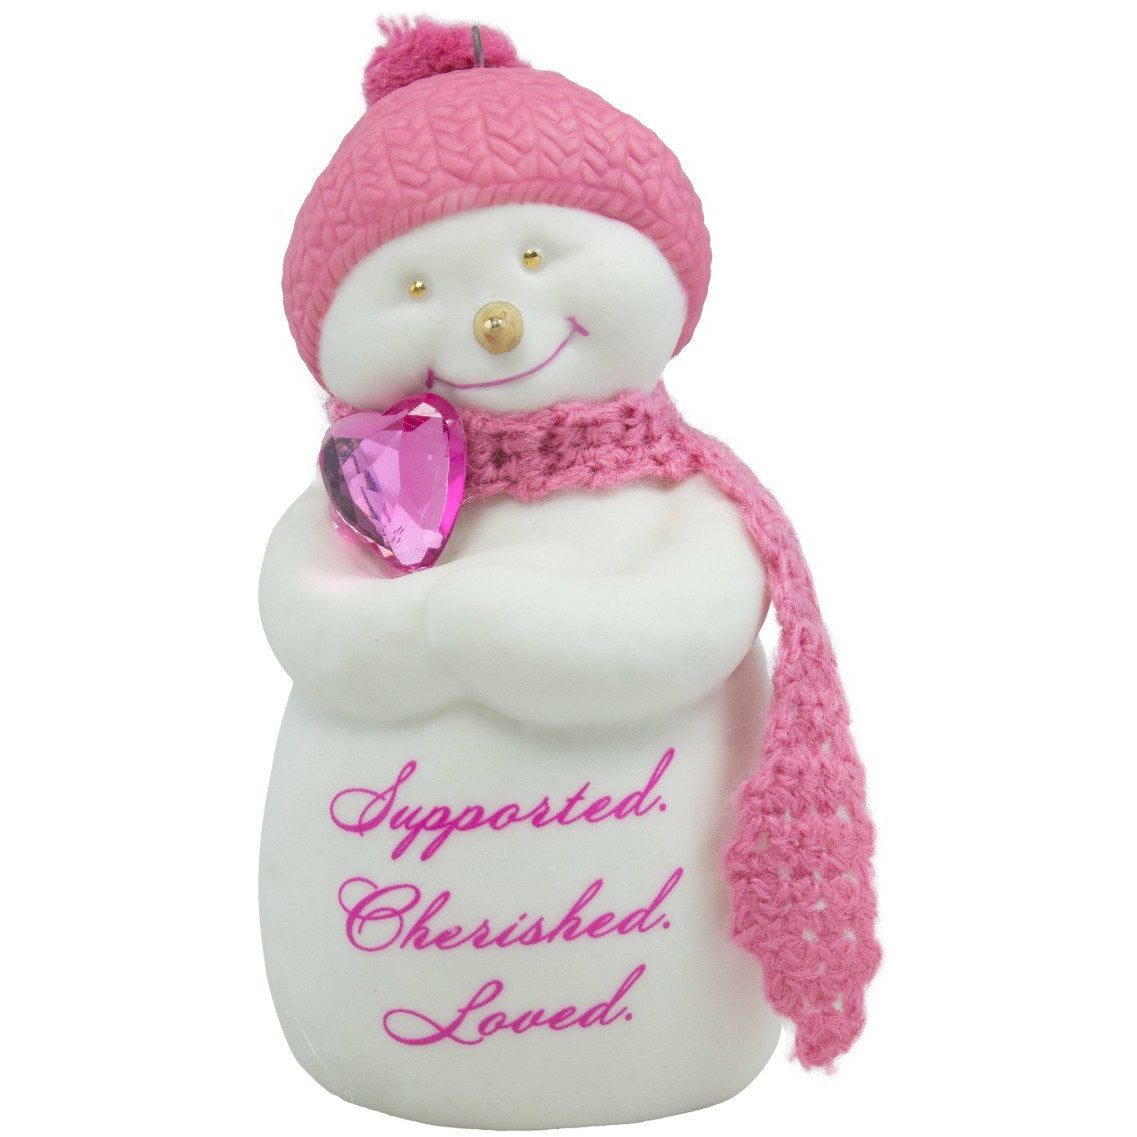 Hallmark Wrapped in Love Susan Komondor 2016 Snowman Christmas Ornament